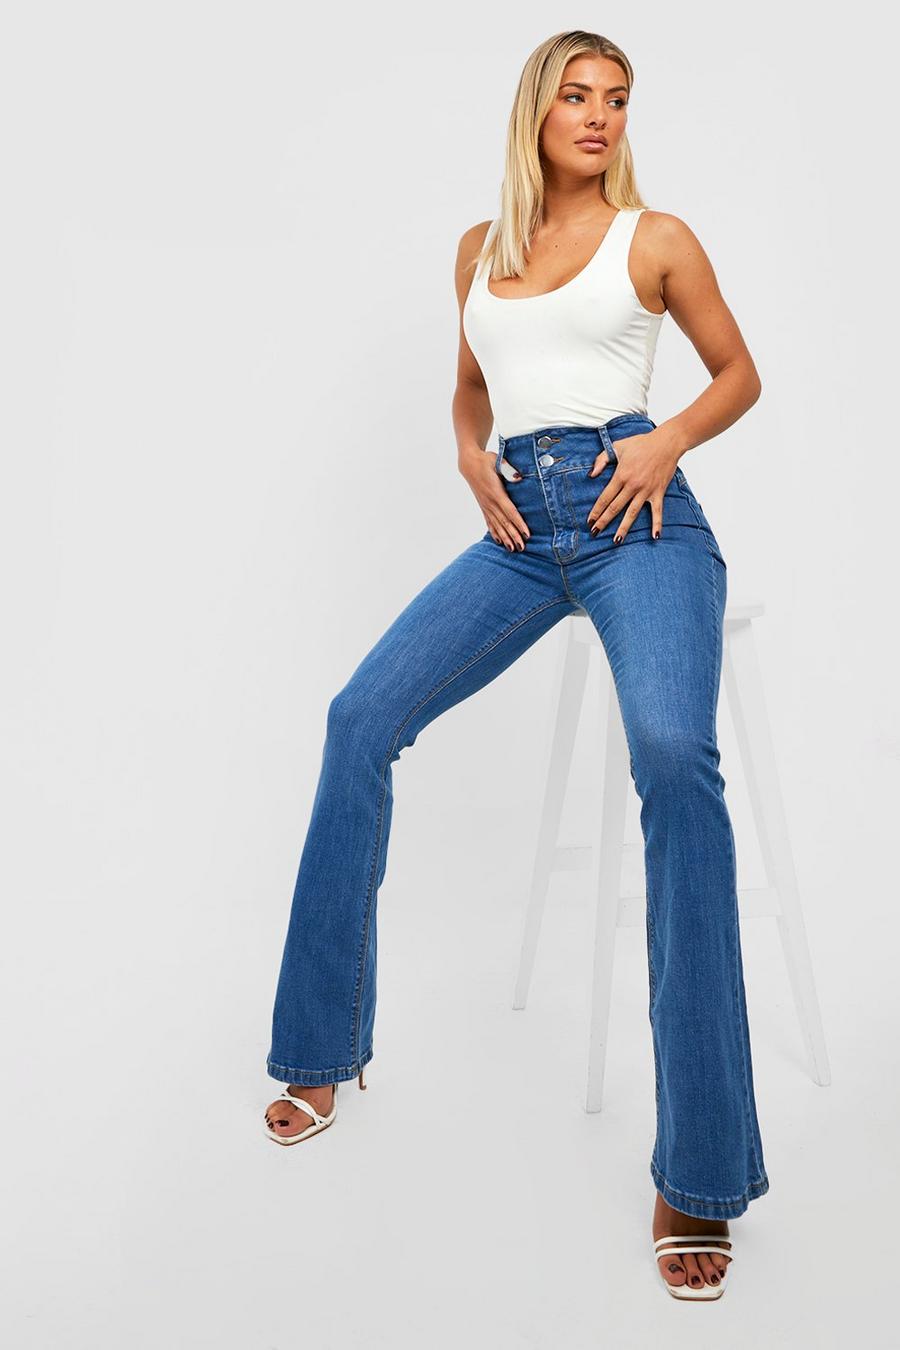 Boohoo Women's High Waisted Flared Jeans